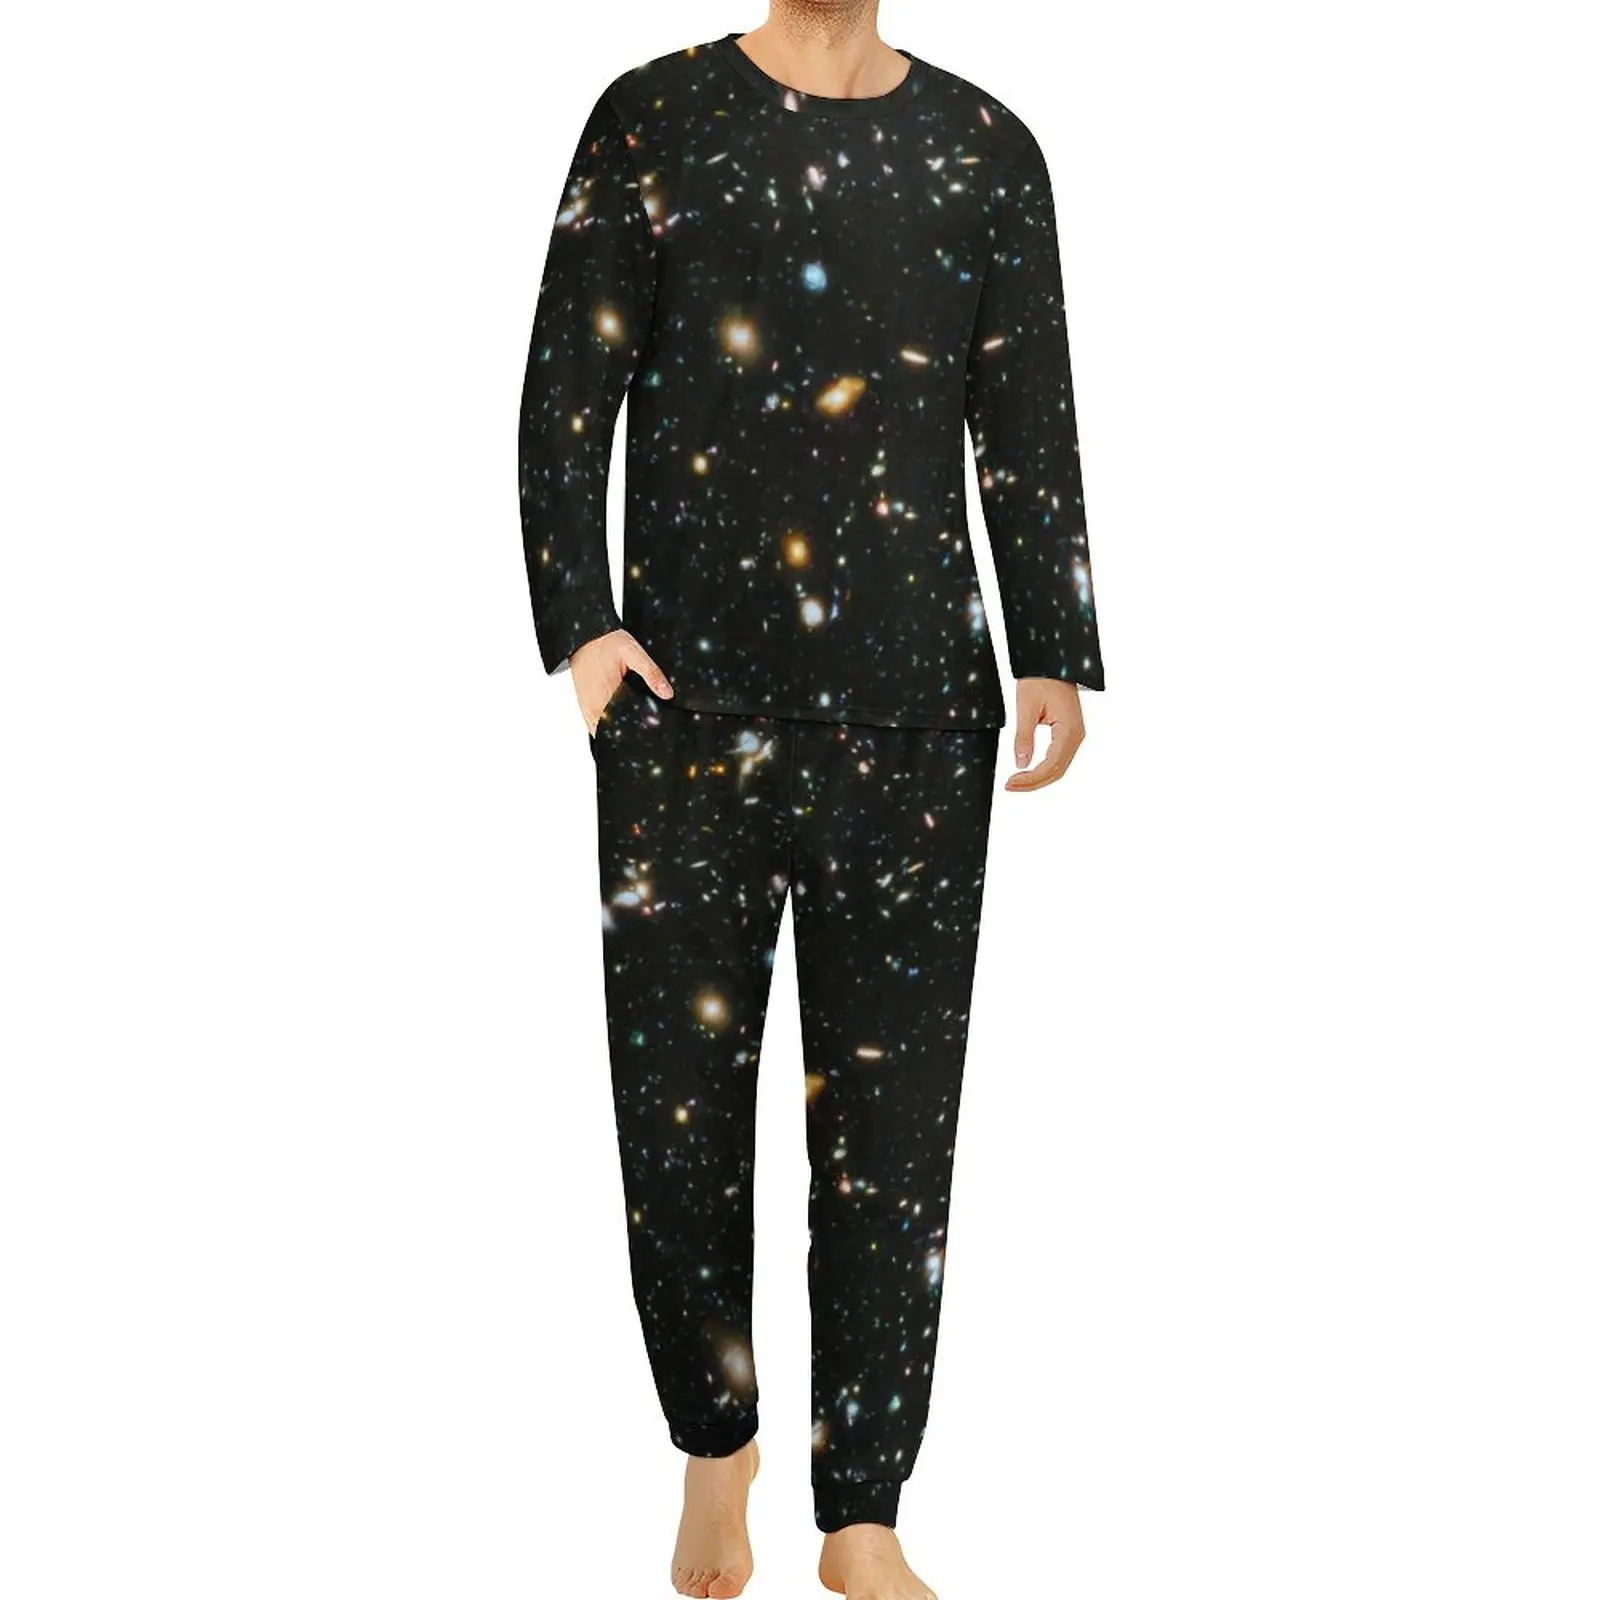 

Galaxy Star Pajamas Artistic Stars Space Black Man Long-Sleeve Lovely Pajama Sets 2 Piece Casual Spring Printed Nightwear Gift